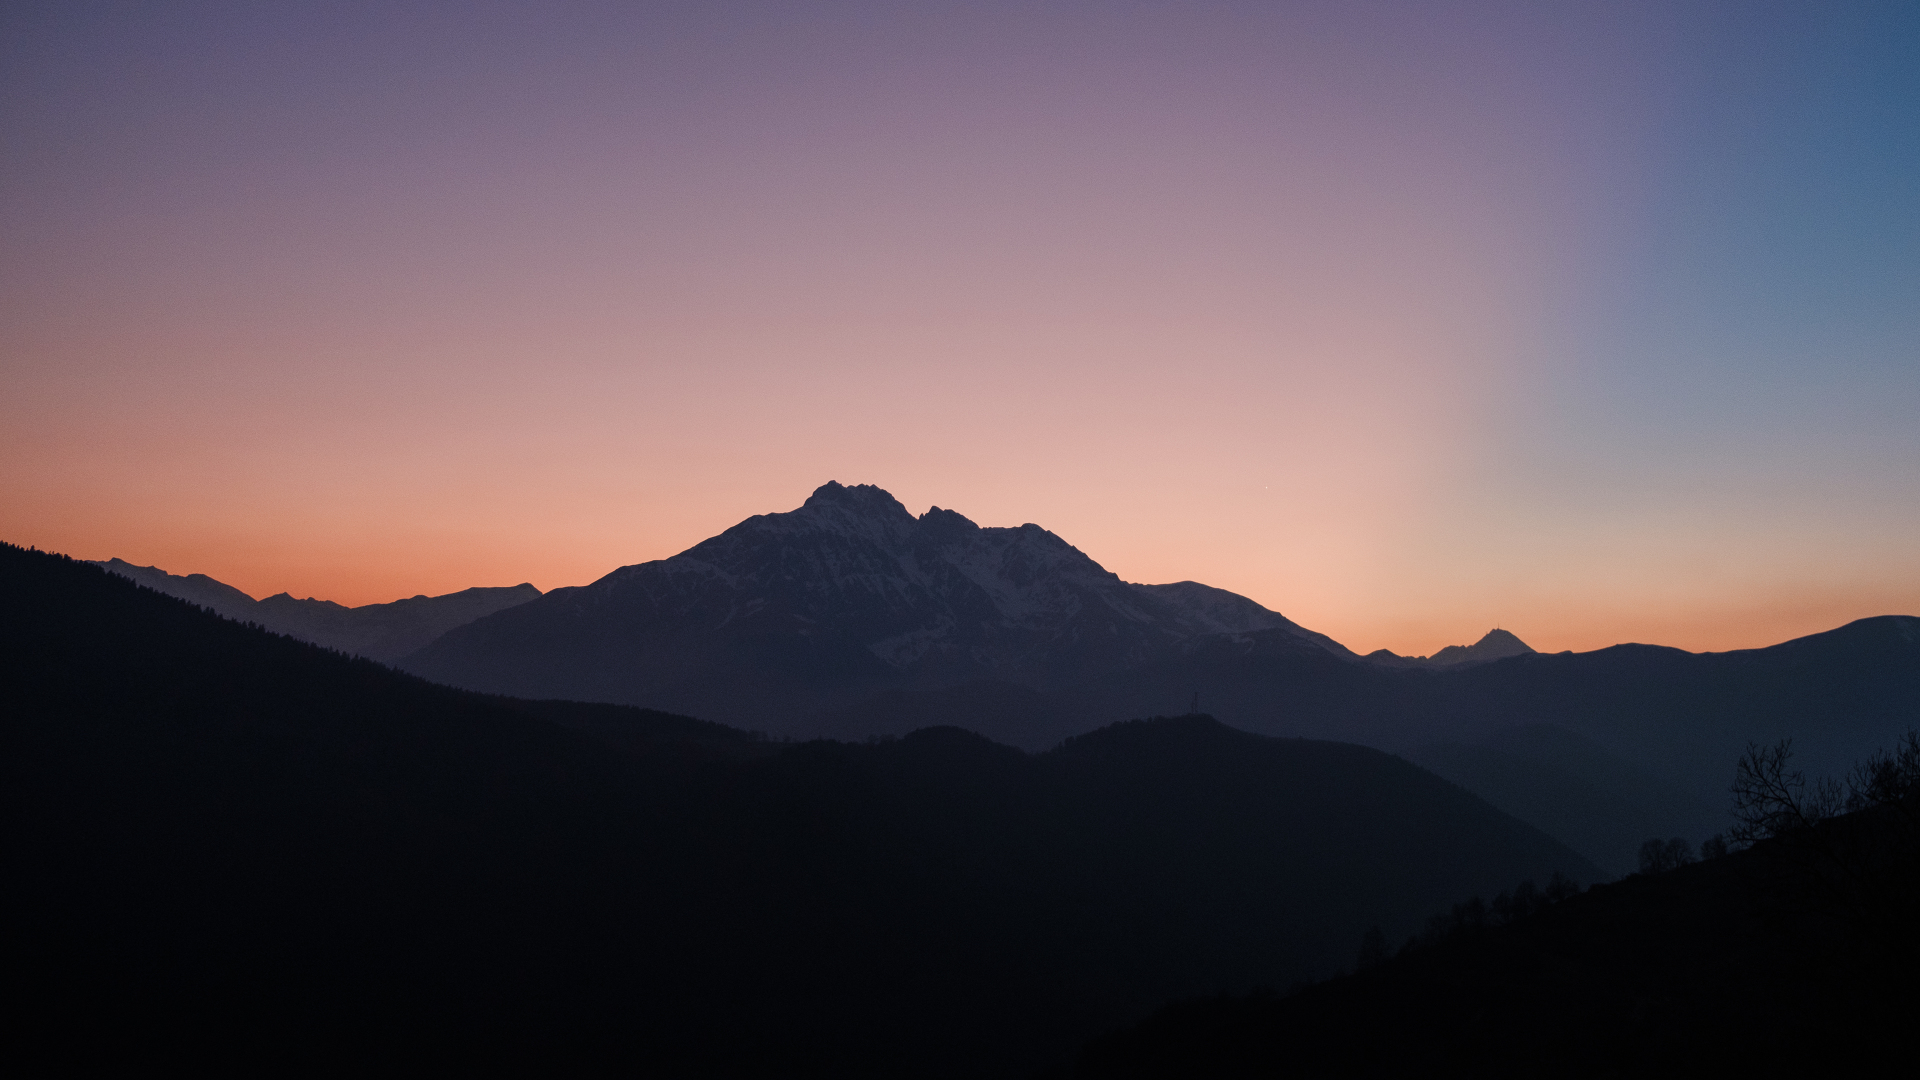 Download 1920x1080 Wallpaper Mountains Sunset Clean Skyline Mist